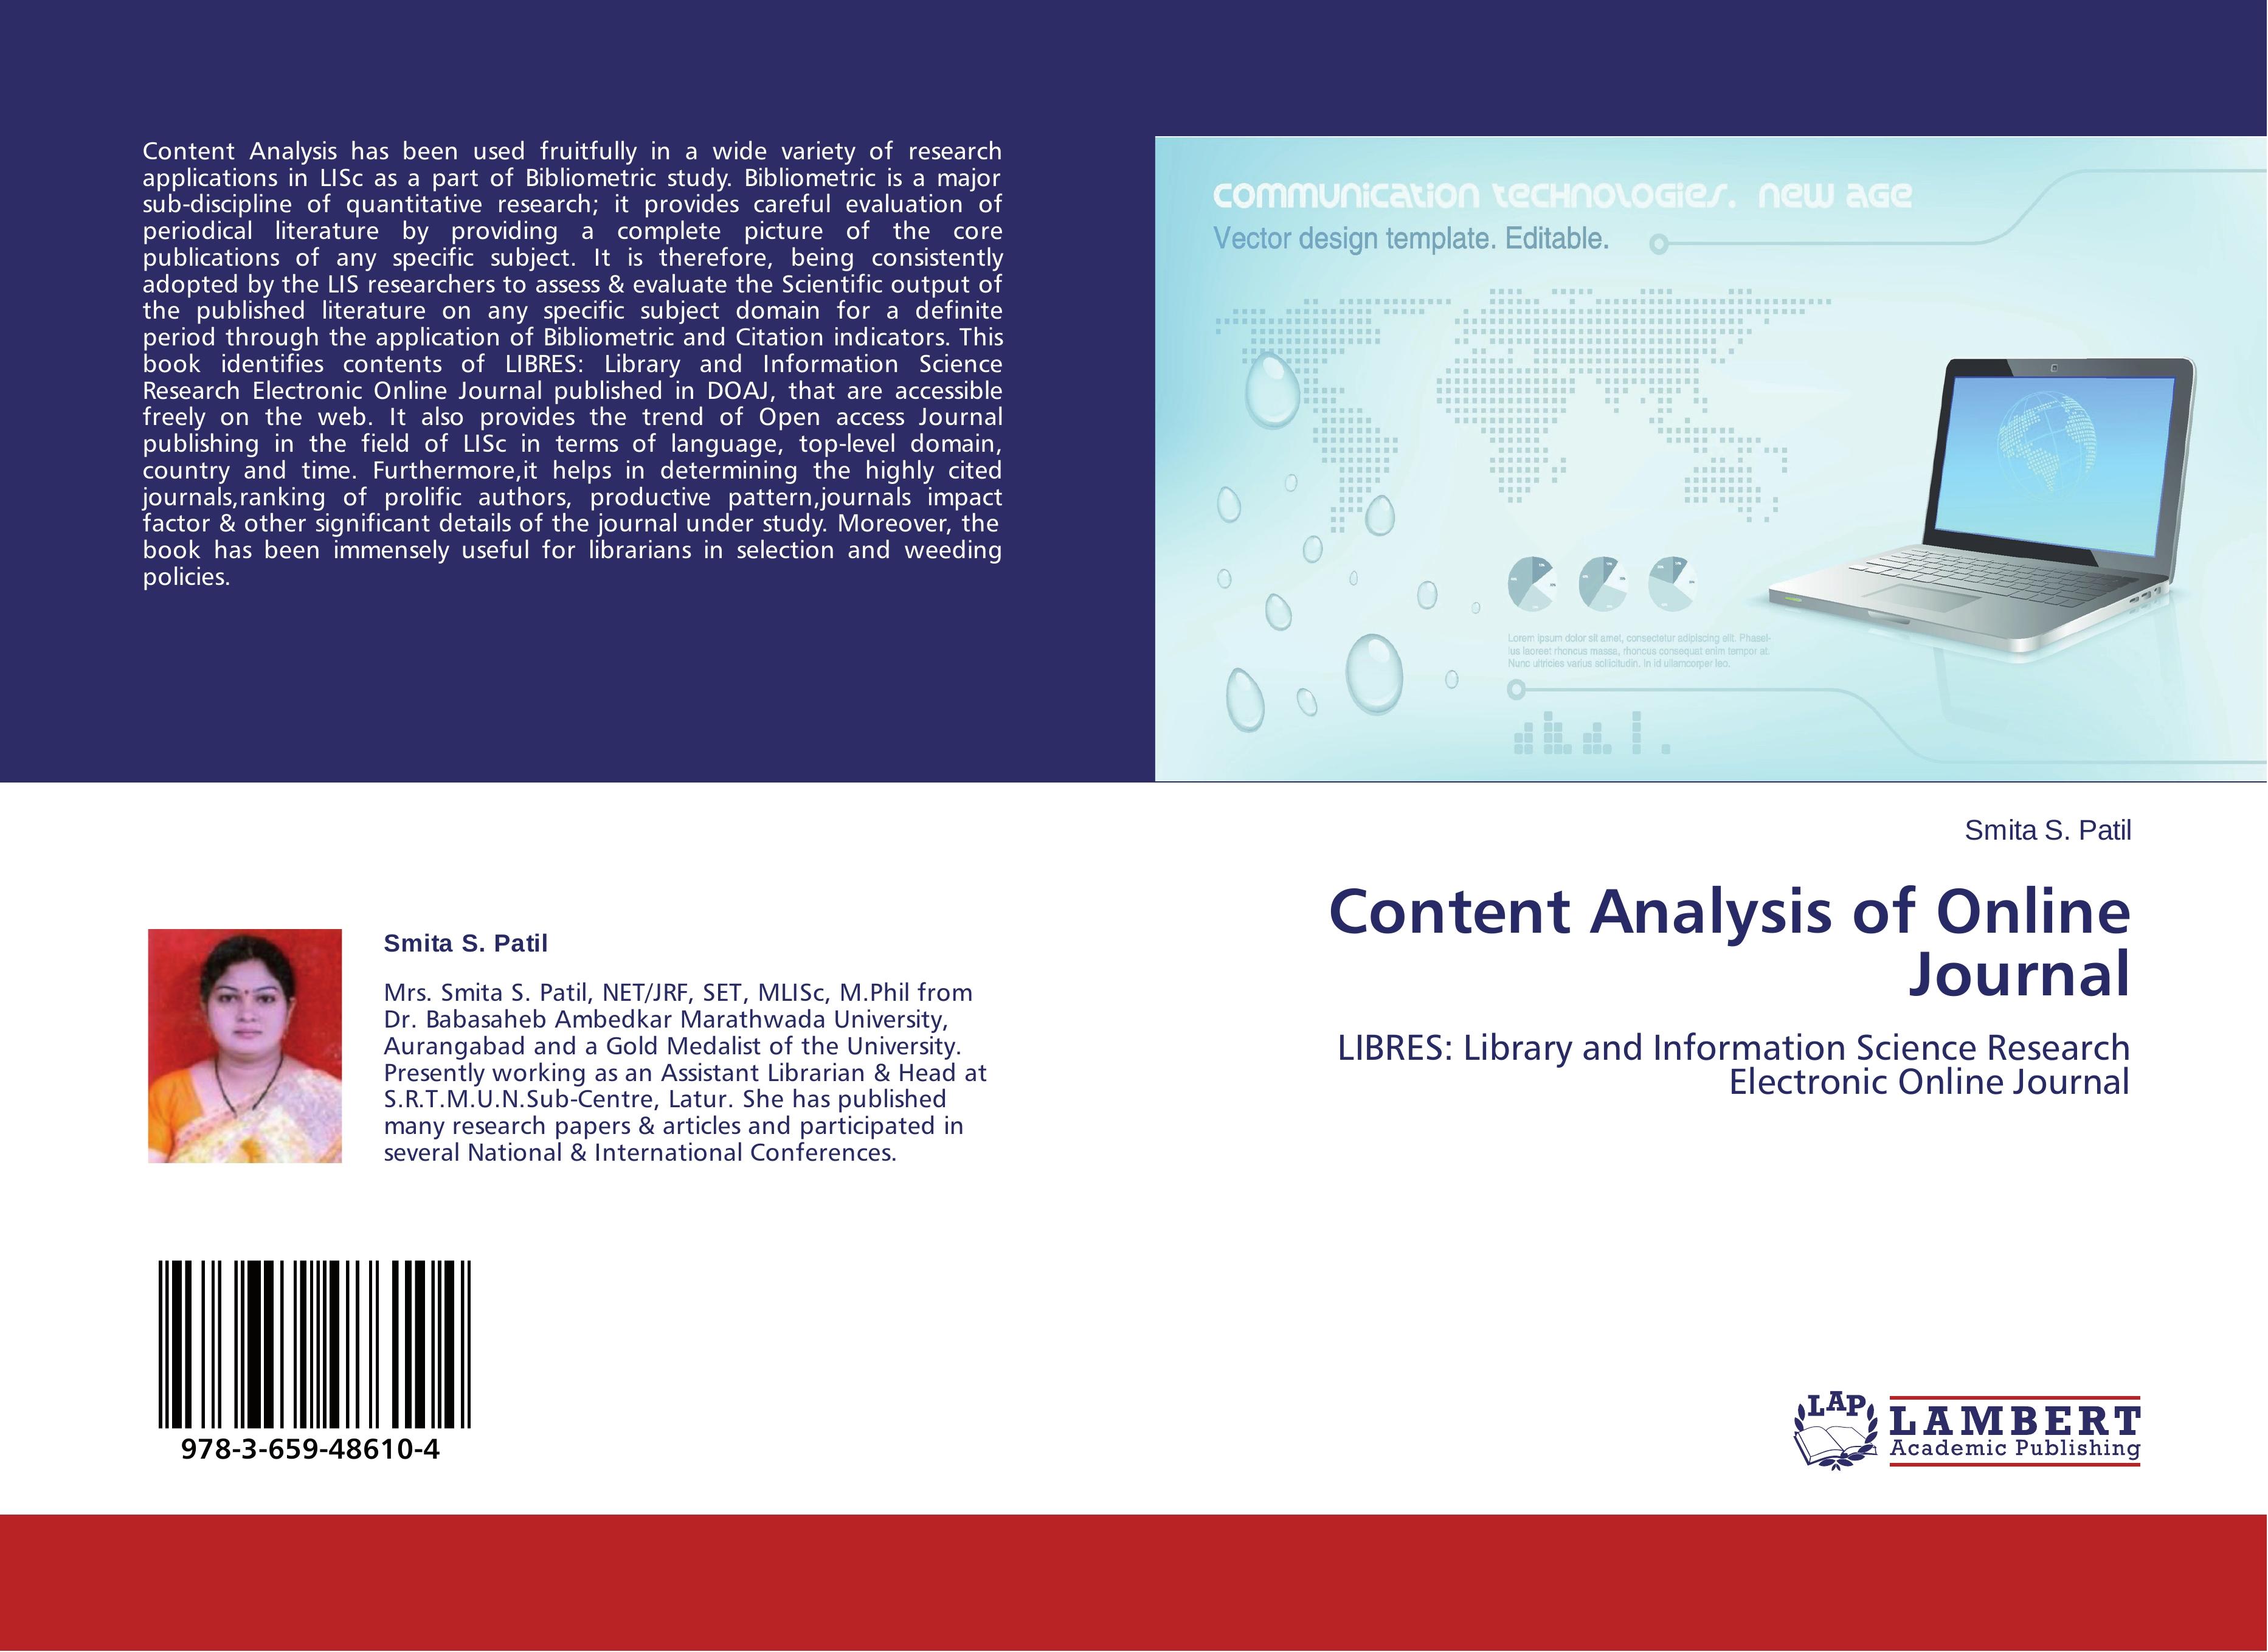 Content Analysis of Online Journal - Smita S. Patil